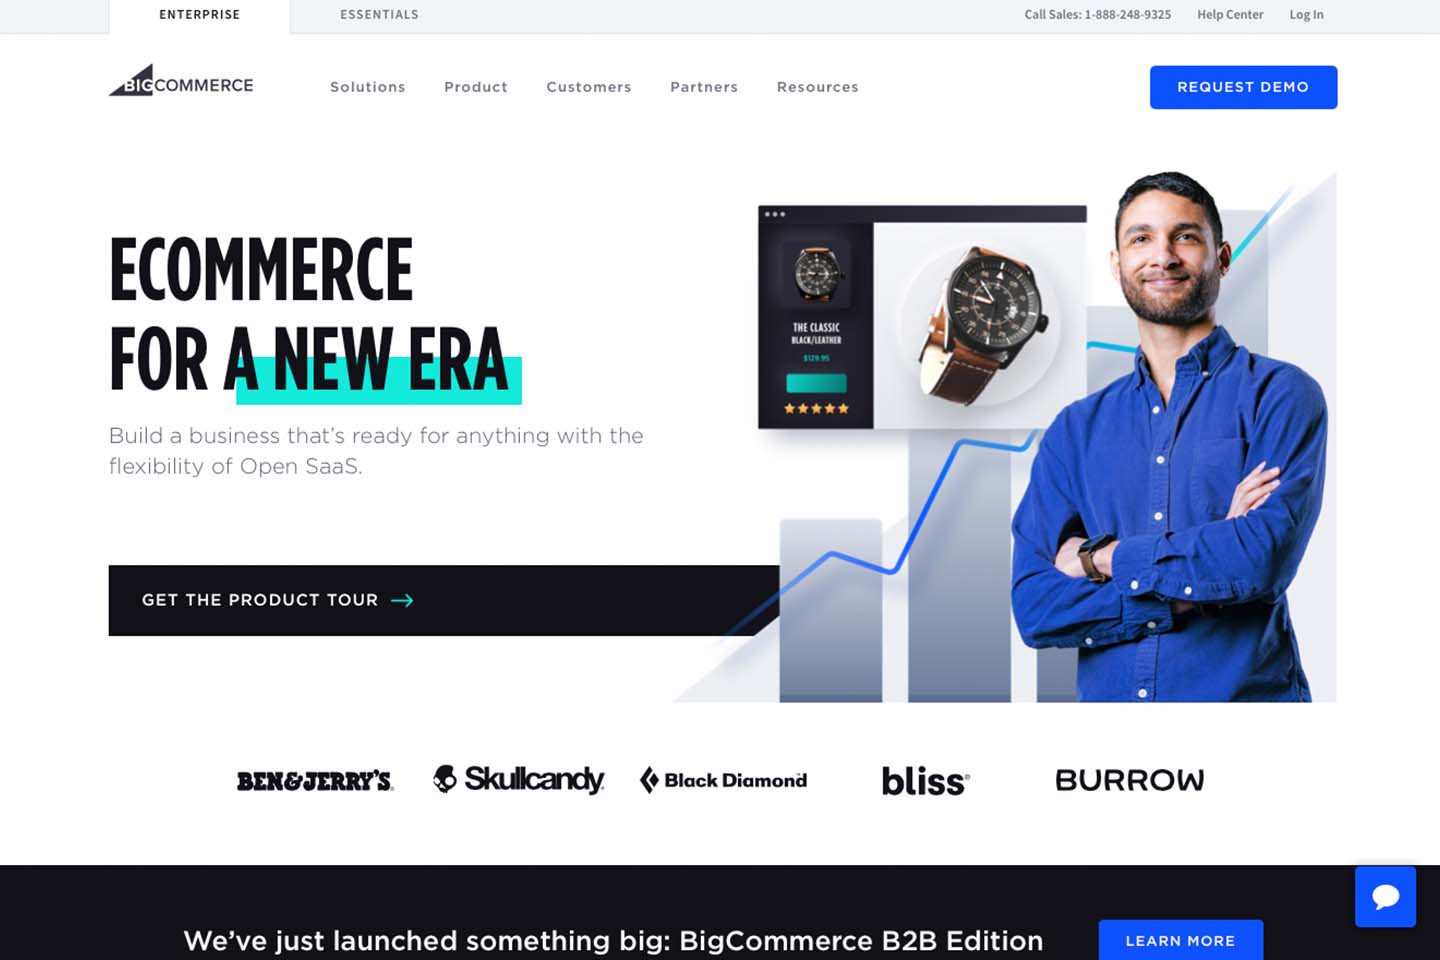 Screenshot of BigCommerce website homepage